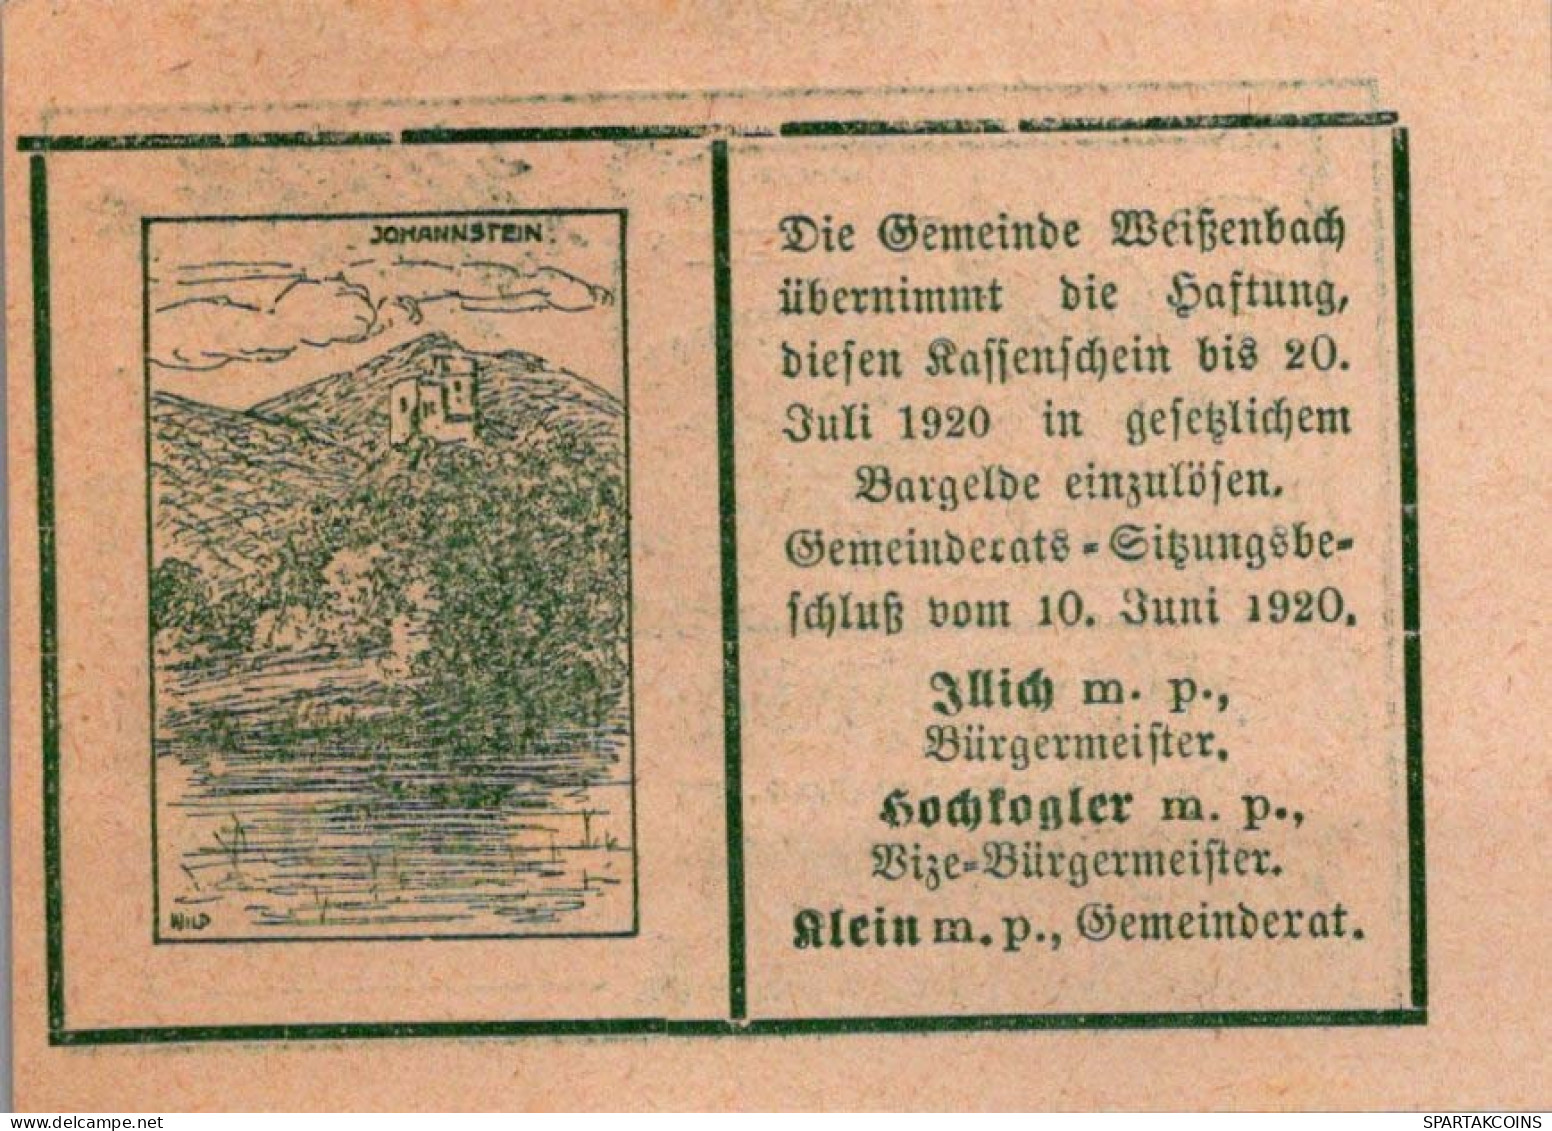 50 HELLER 1920 Stadt WEISSENBACH BEI MoDLING Niedrigeren Österreich #PE025 - [11] Lokale Uitgaven